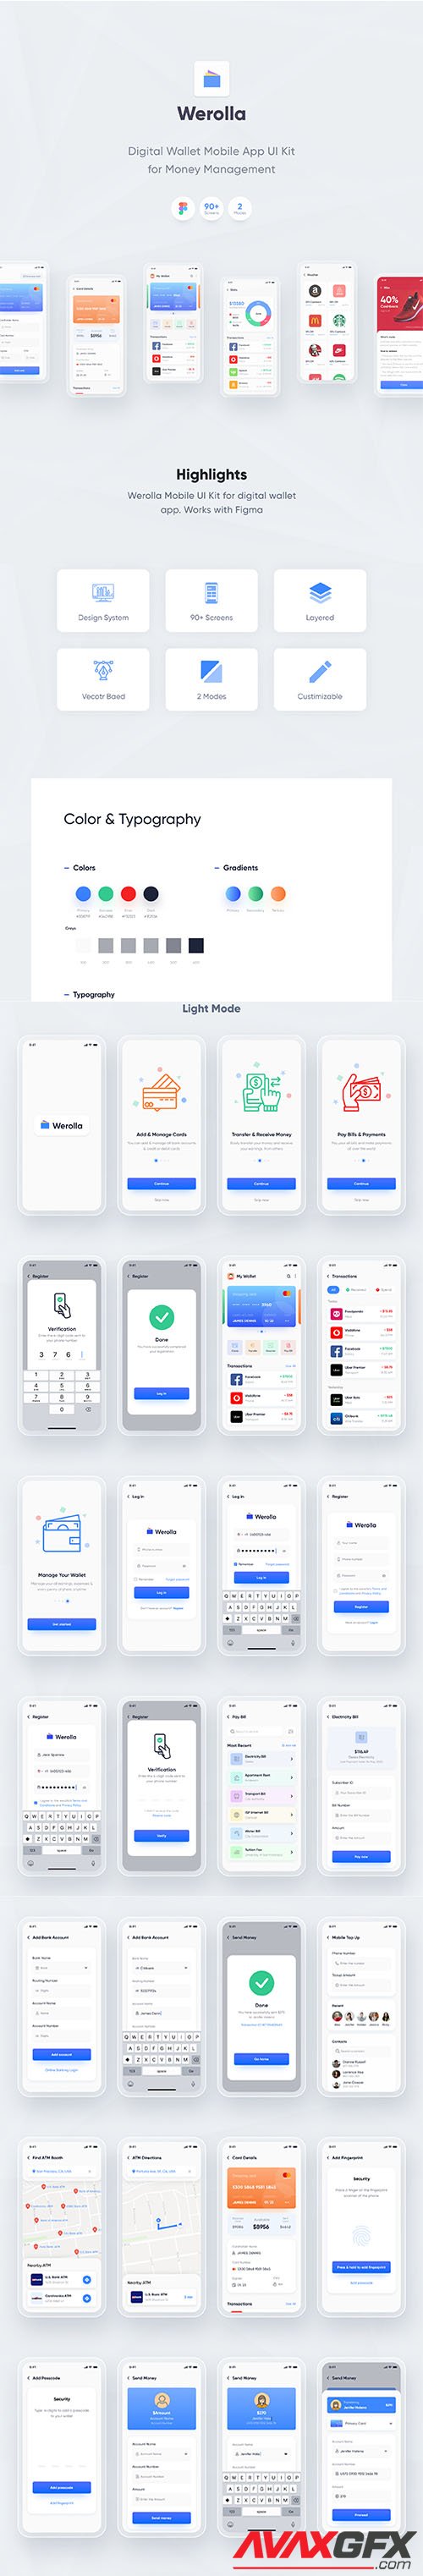 Werolla - Mobile App UI Kit for Wallet, Finance & Banking App